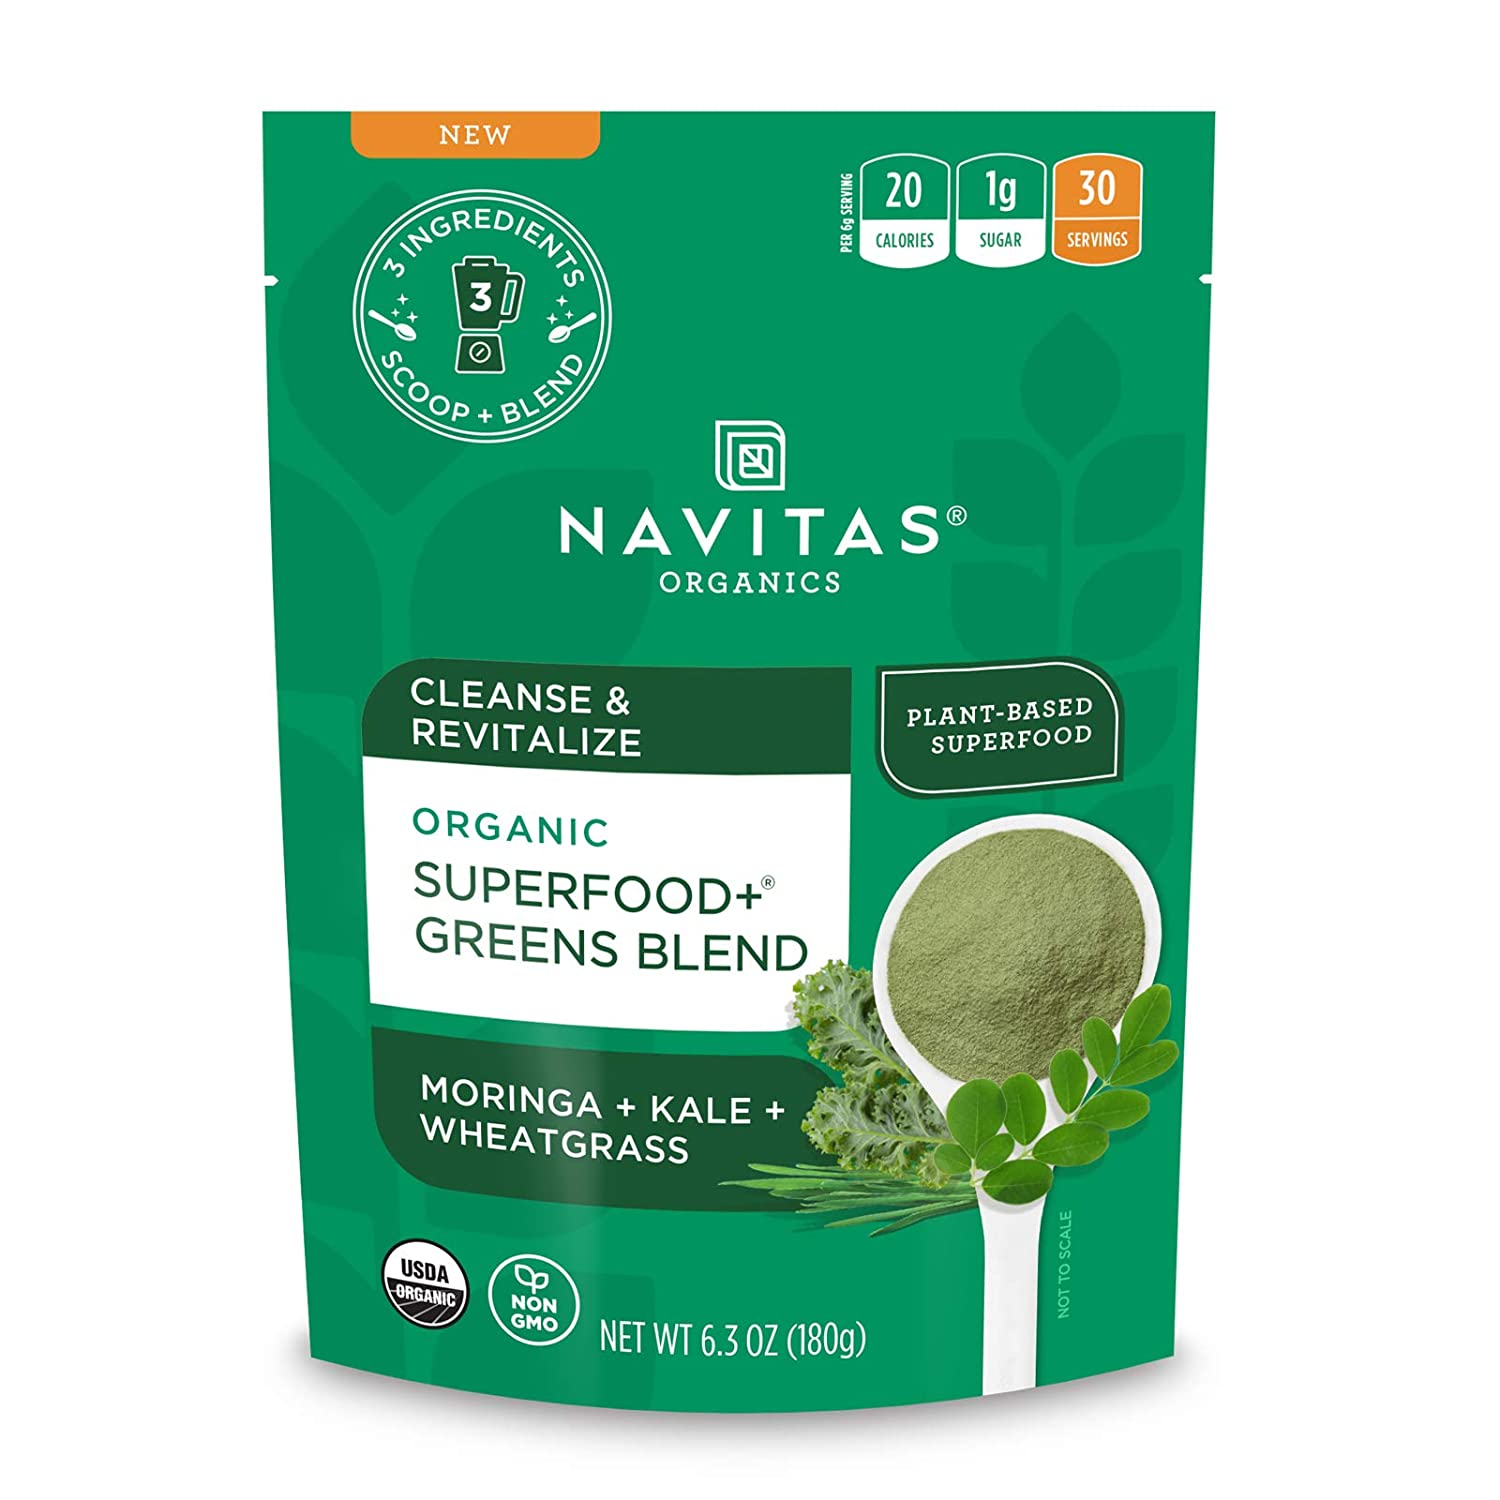 Navitas Organics Superfood+ Greens Blend